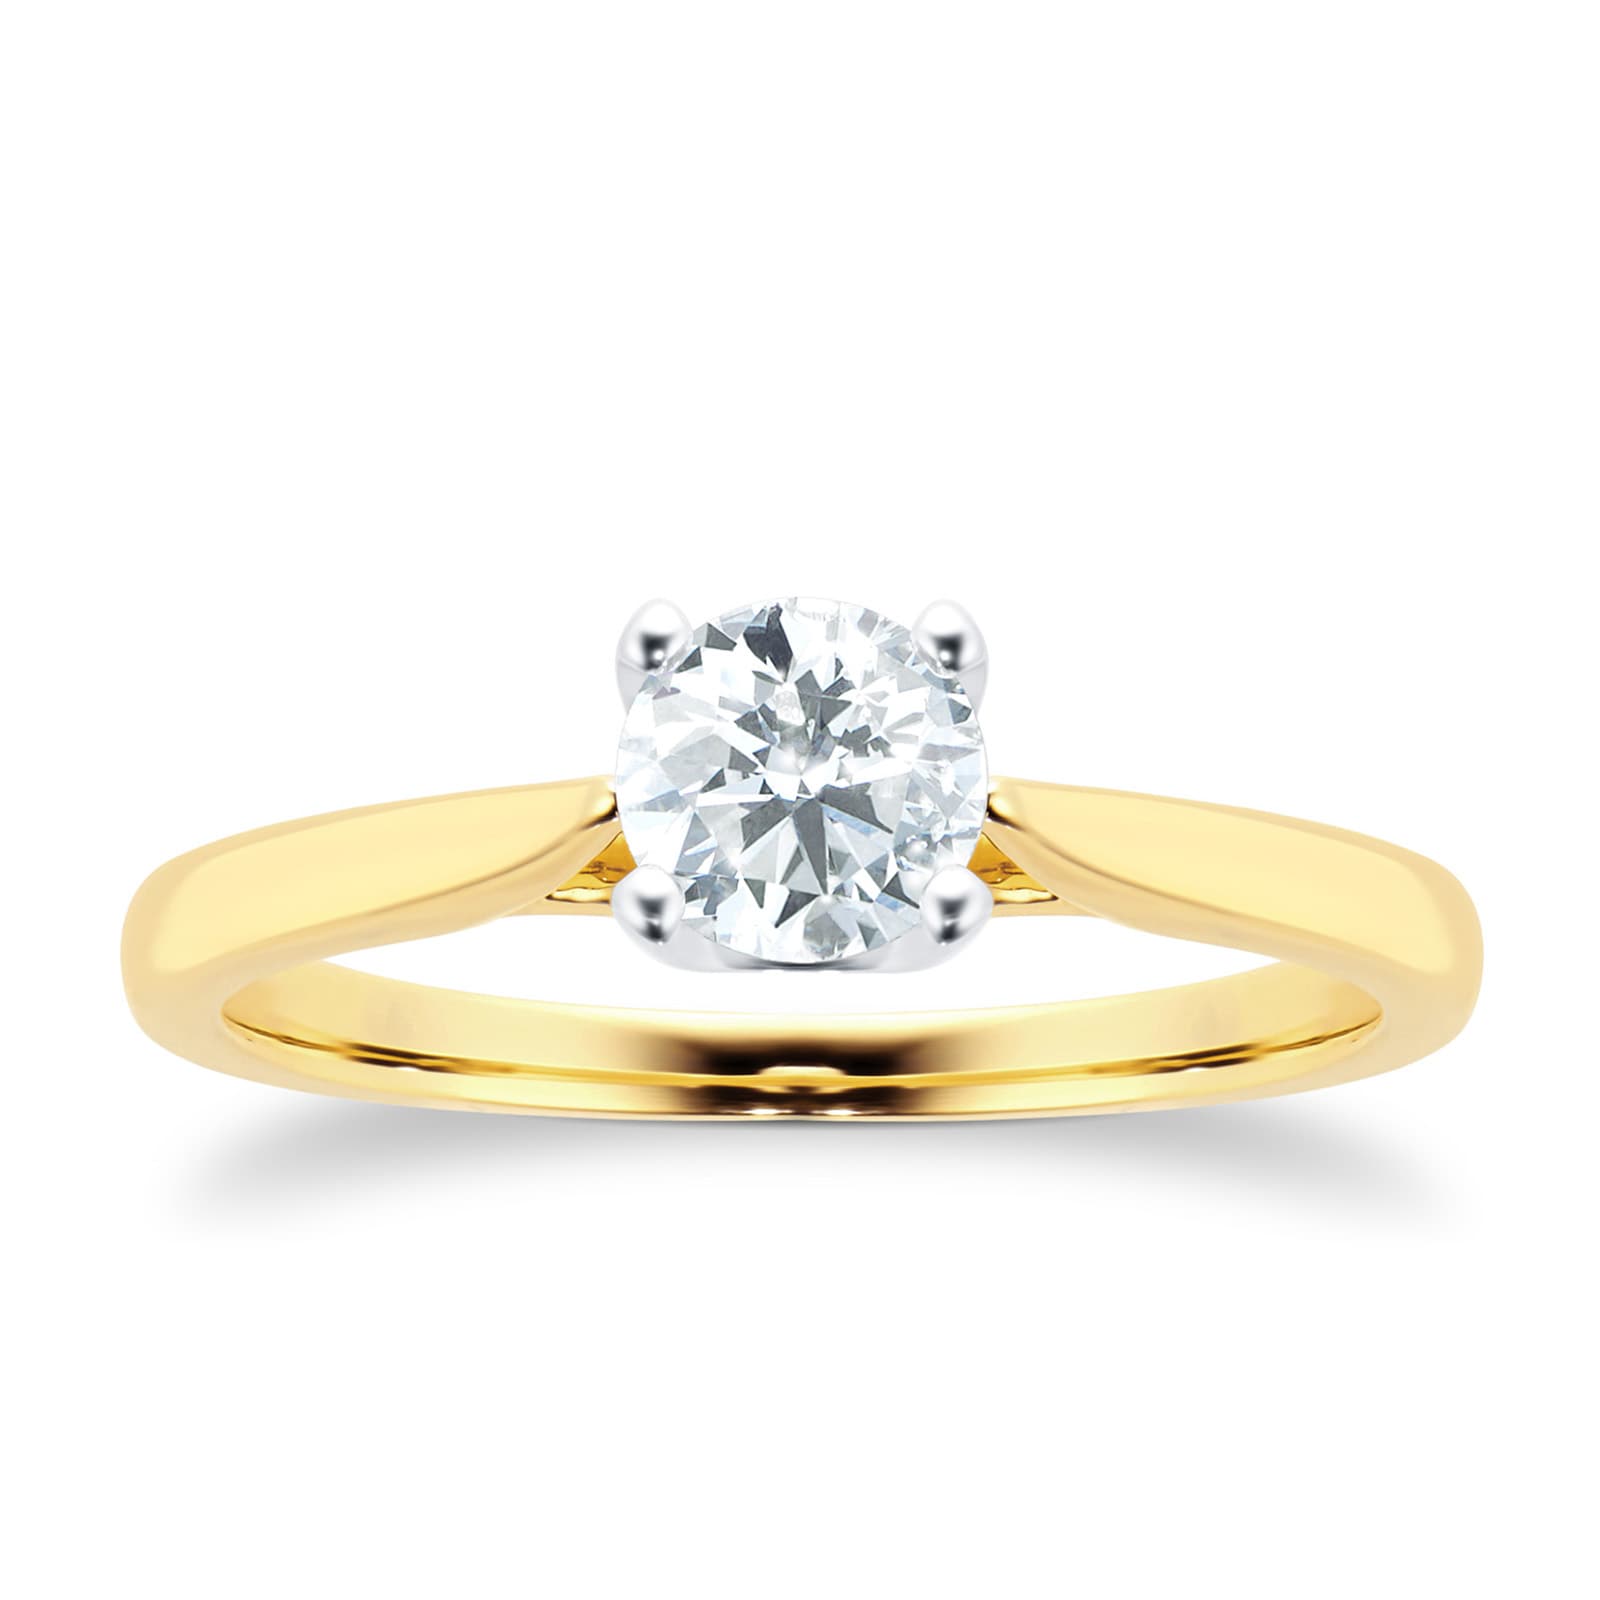 18ct Yellow Gold Brilliant Cut 0.50 Carat 88 Facet Diamond Ring - Ring Size O